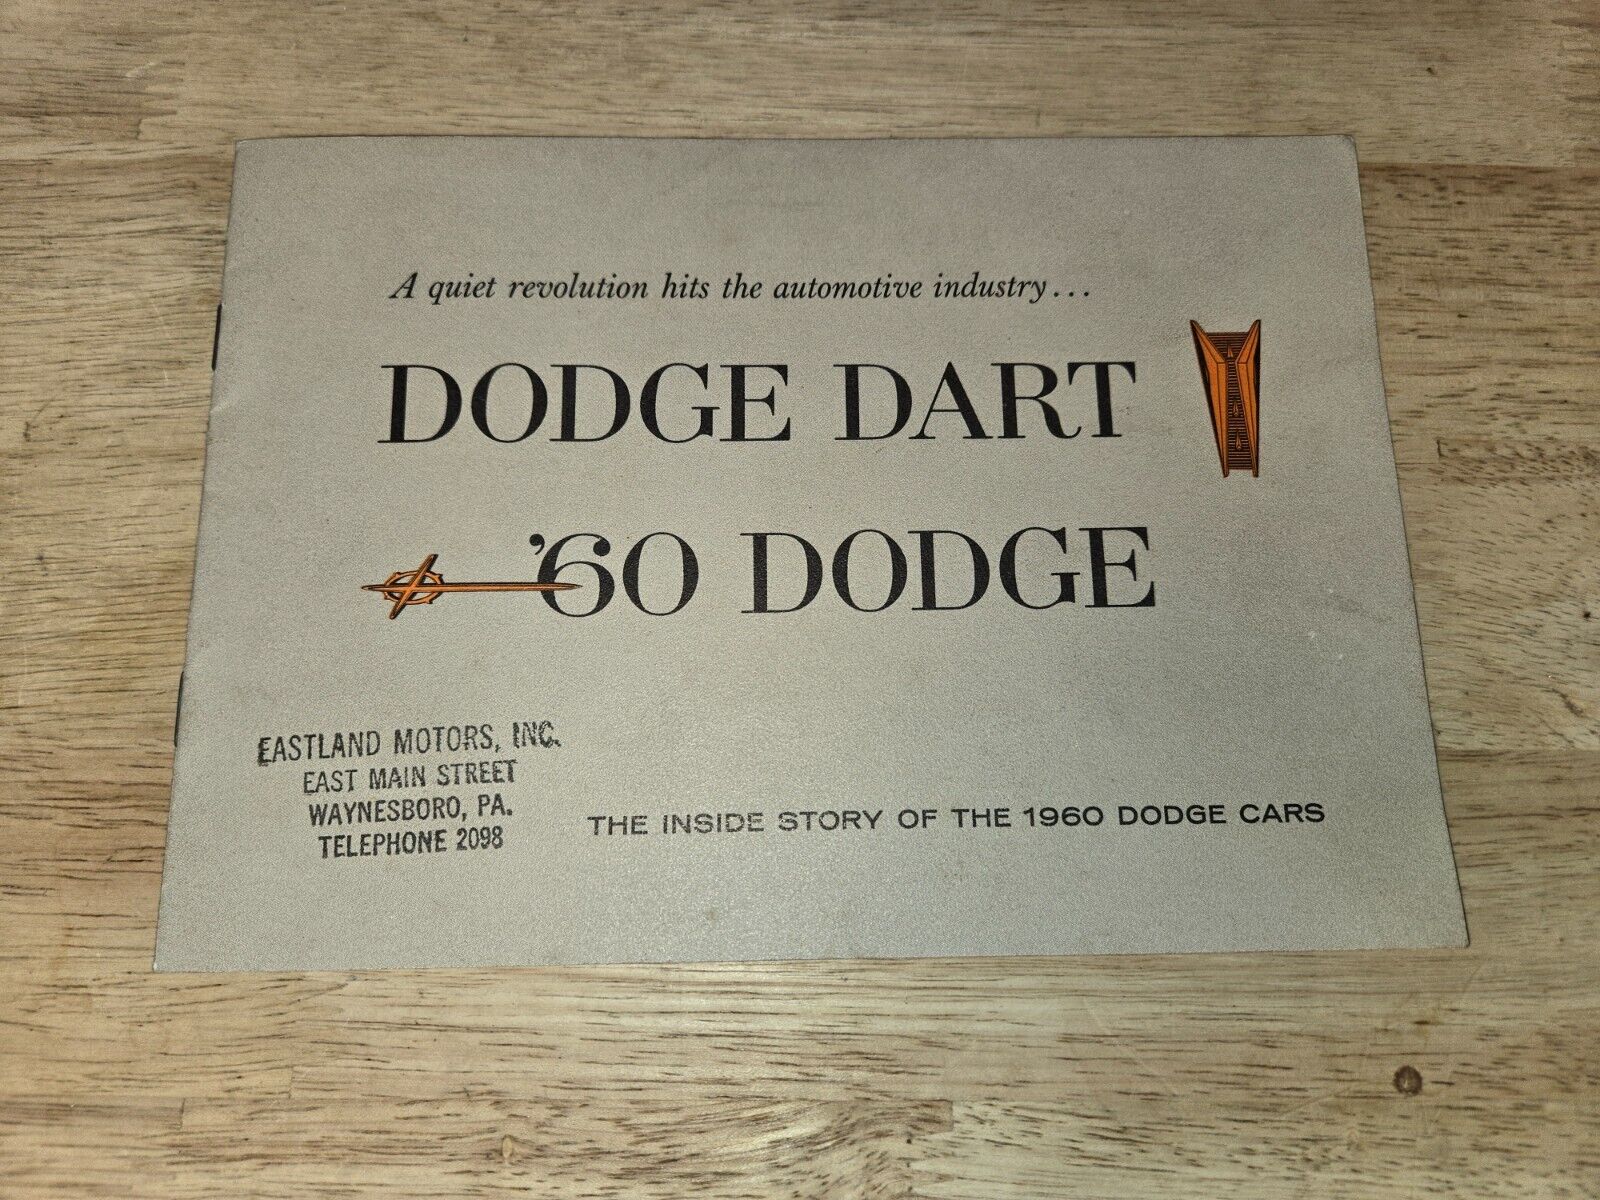 DODGE DART \'60 DODGE 10 PG BROCHURE EASTLAND MOTORS WAYNESBORO, PA